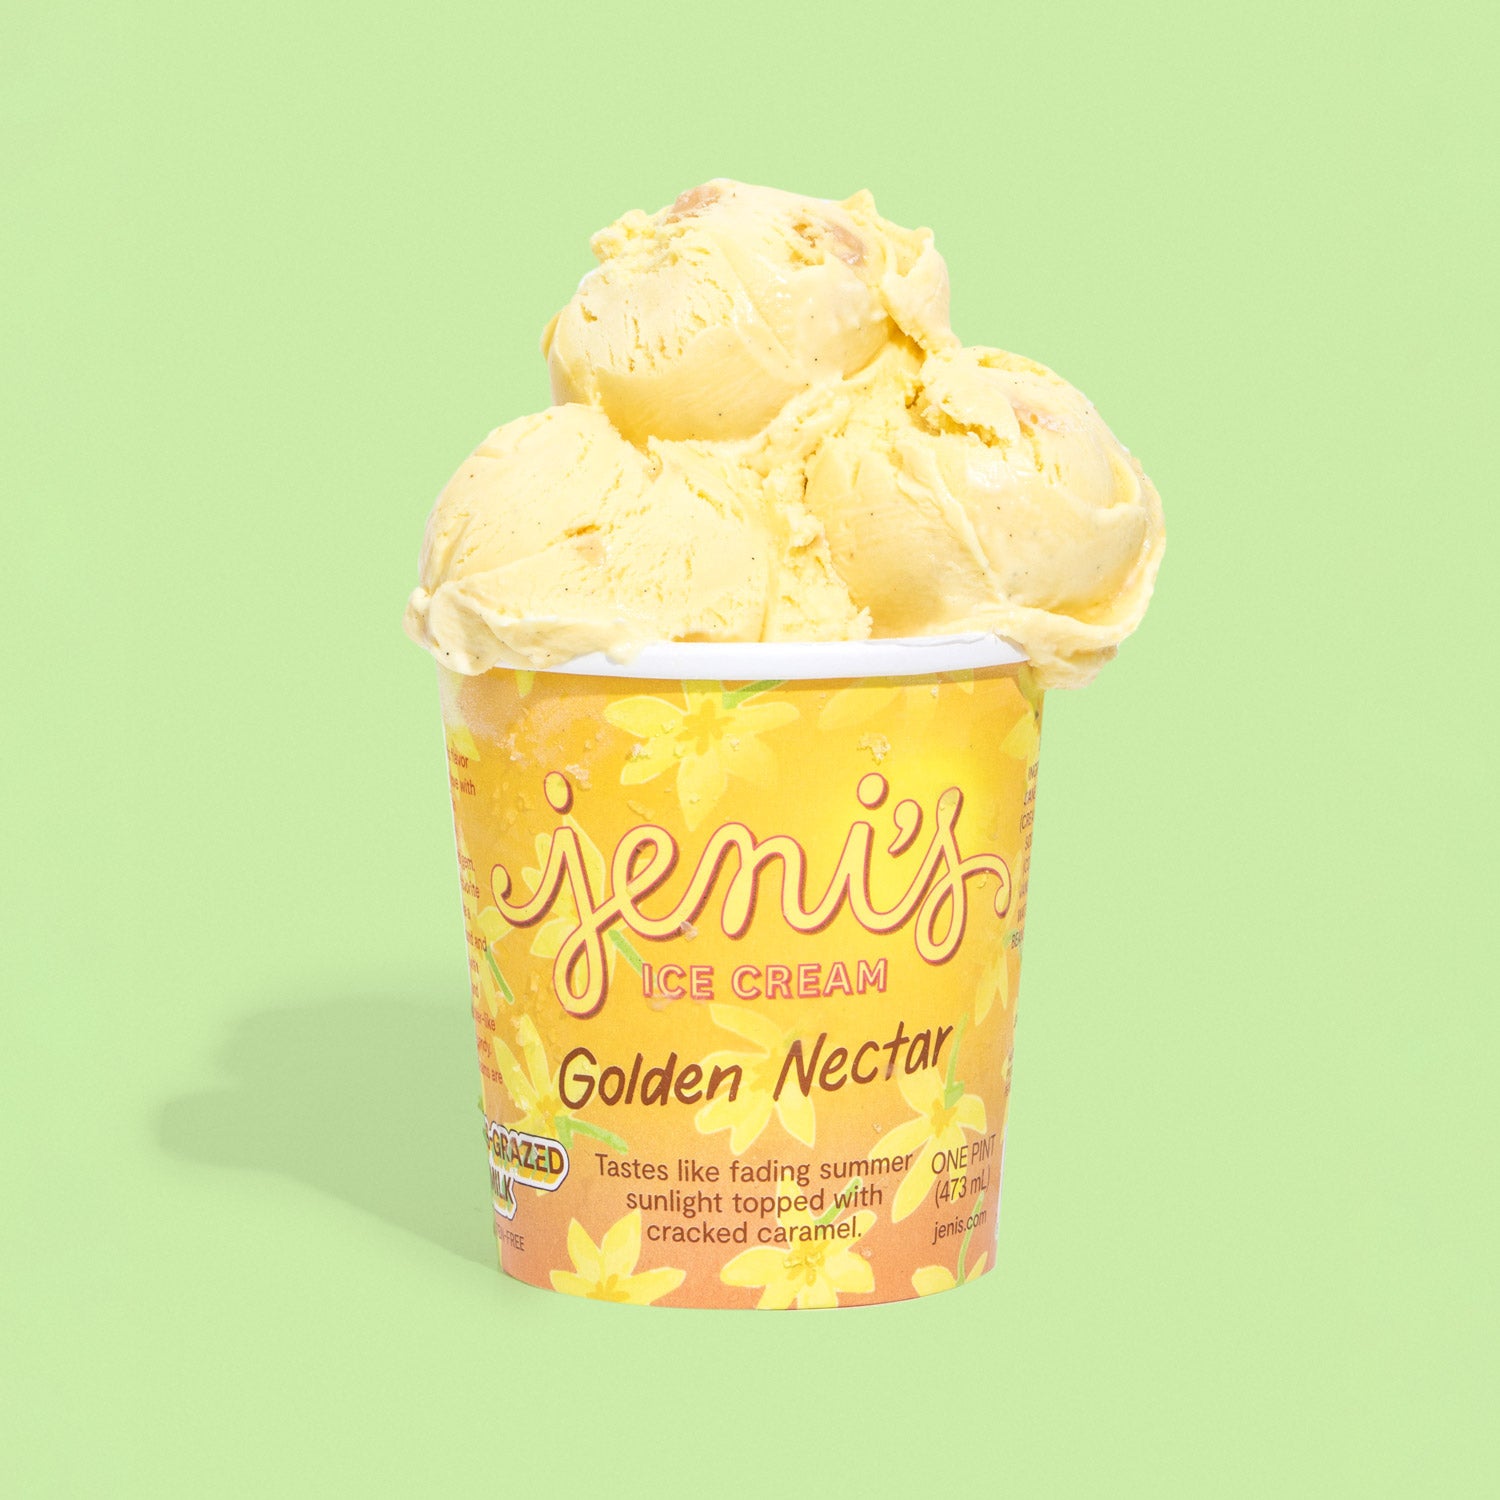 Golden Nectar | Jeni's Splendid Ice Creams